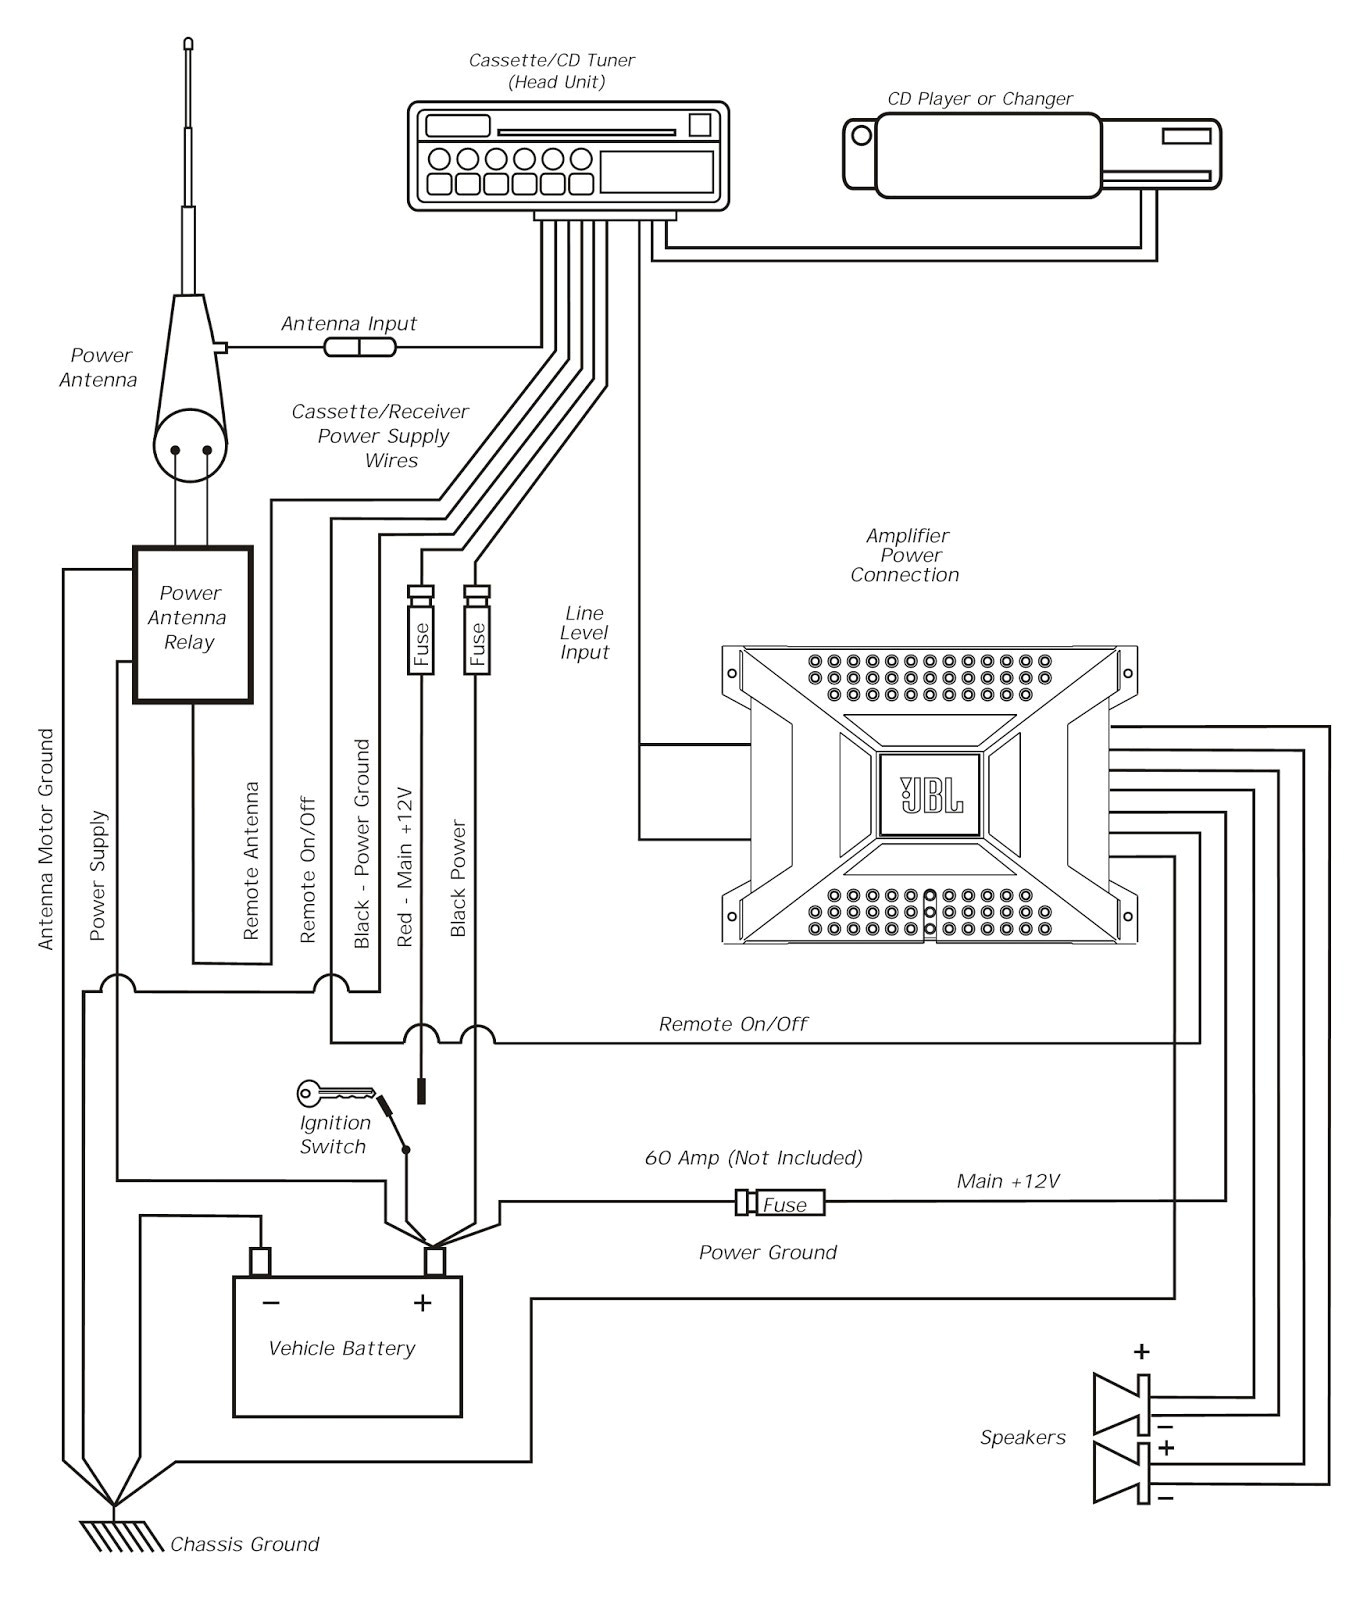 hyundai excel wiring diagram download inspirational 2003 hyundai tiburon wiring diagram download basic wiring diagram e280a2 jpg